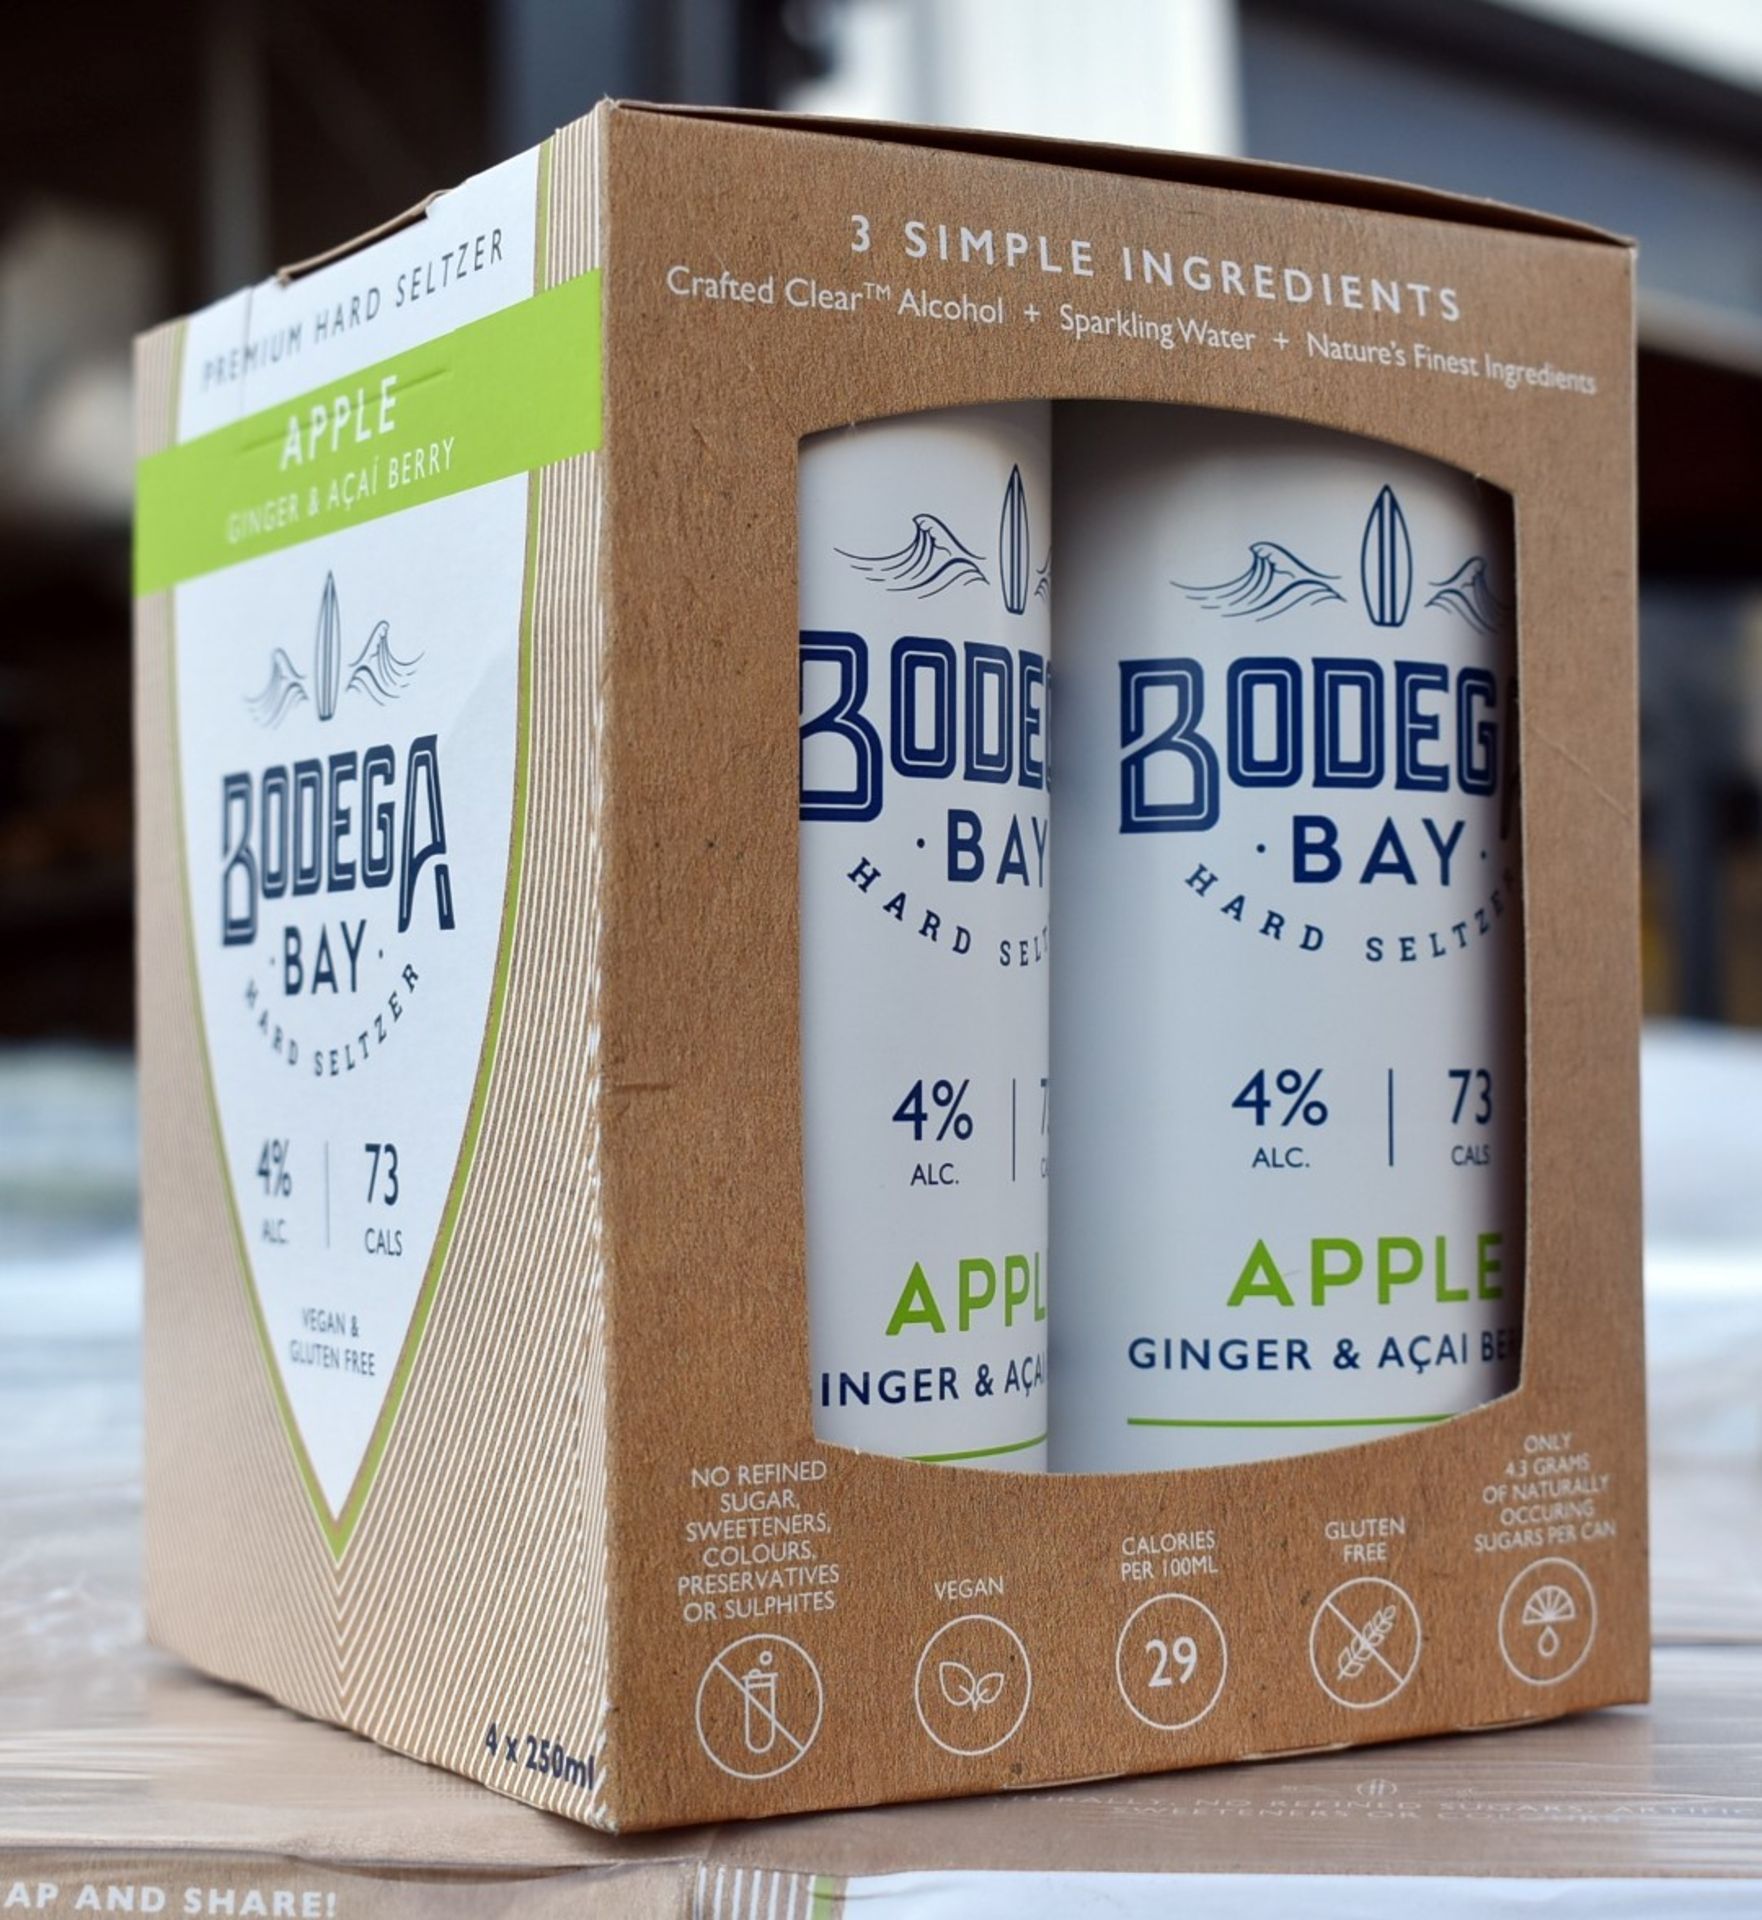 24 x Bodega Bay Hard Seltzer 250ml Alcoholic Sparkling Water Drinks - Apple Ginger & Acai Berry - 4% - Image 2 of 9